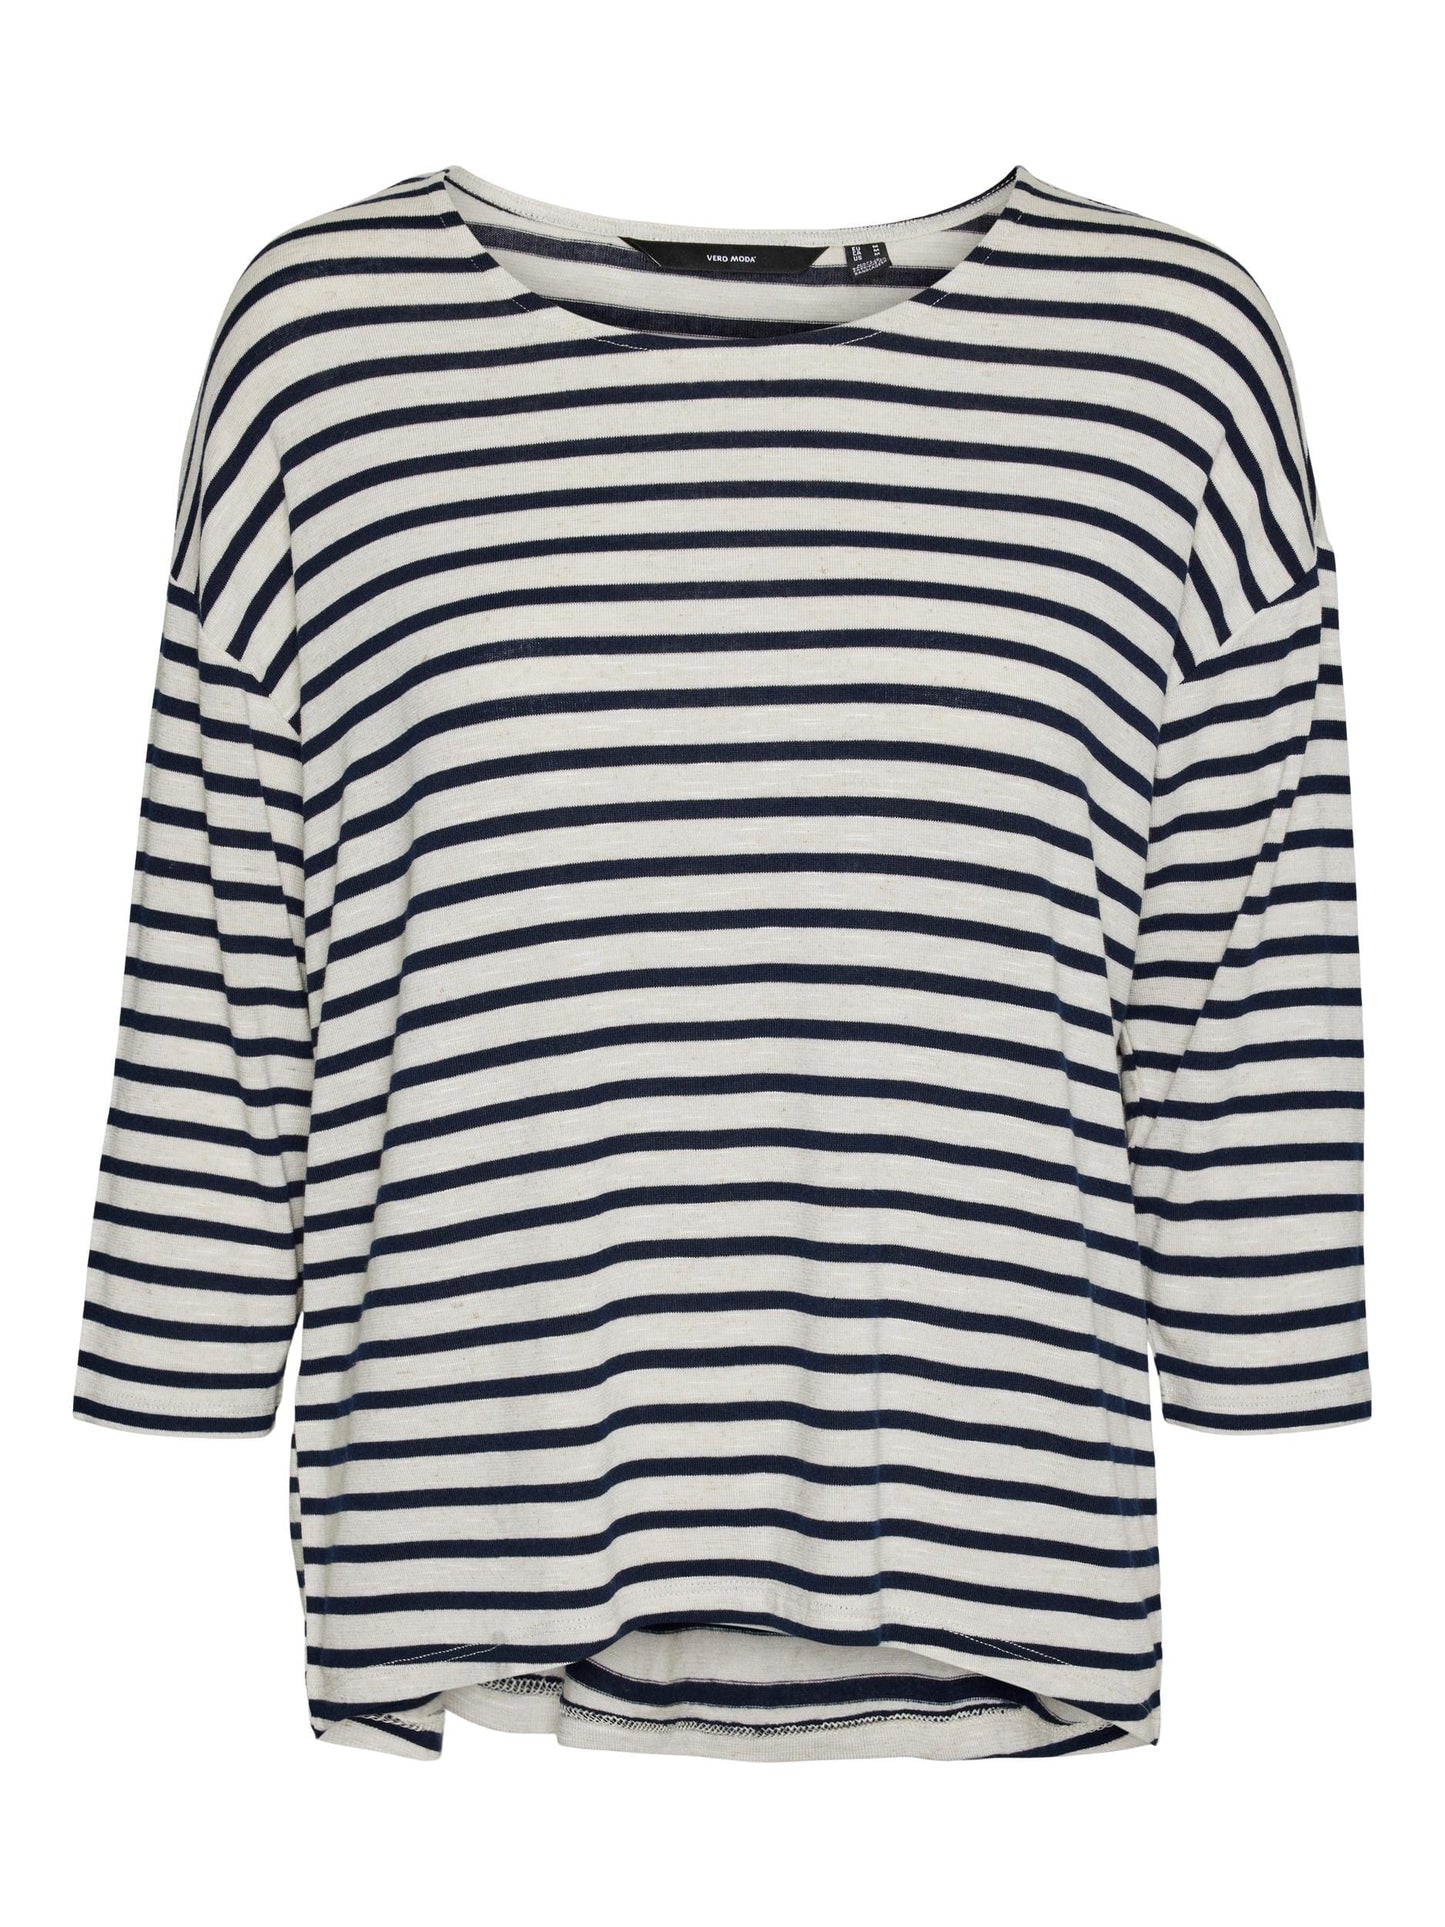 Holly 3/4 Stripe Top | Silver Lining/Navy Blazer Shirts & Tops Vero Moda 